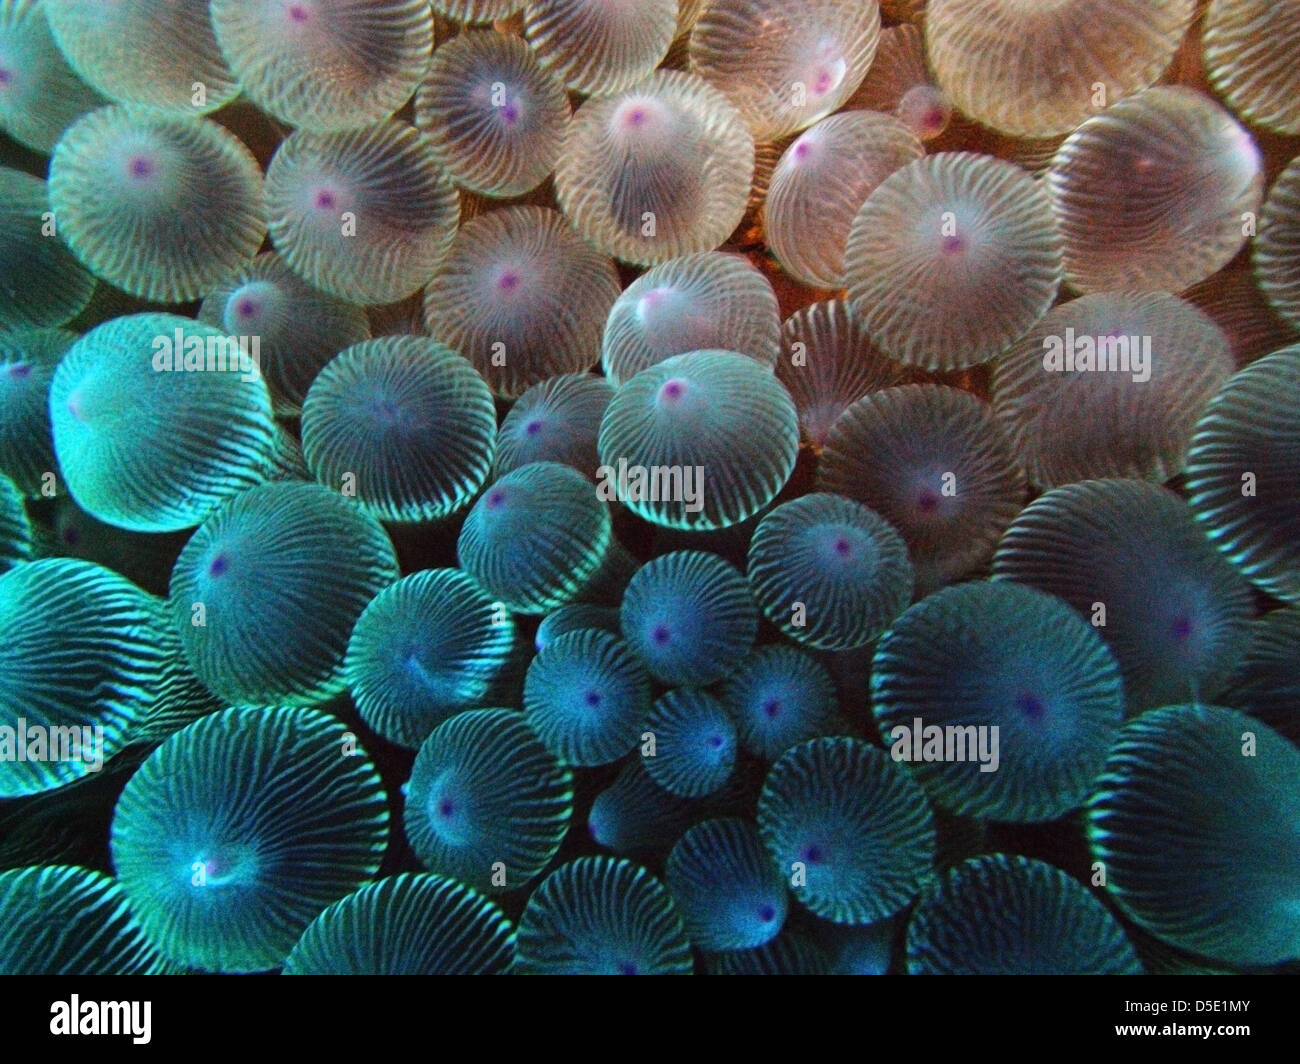 Detail of anemone tentacles, Admiralty Islands, Lord Howe Island Marine Park, Australia Stock Photo